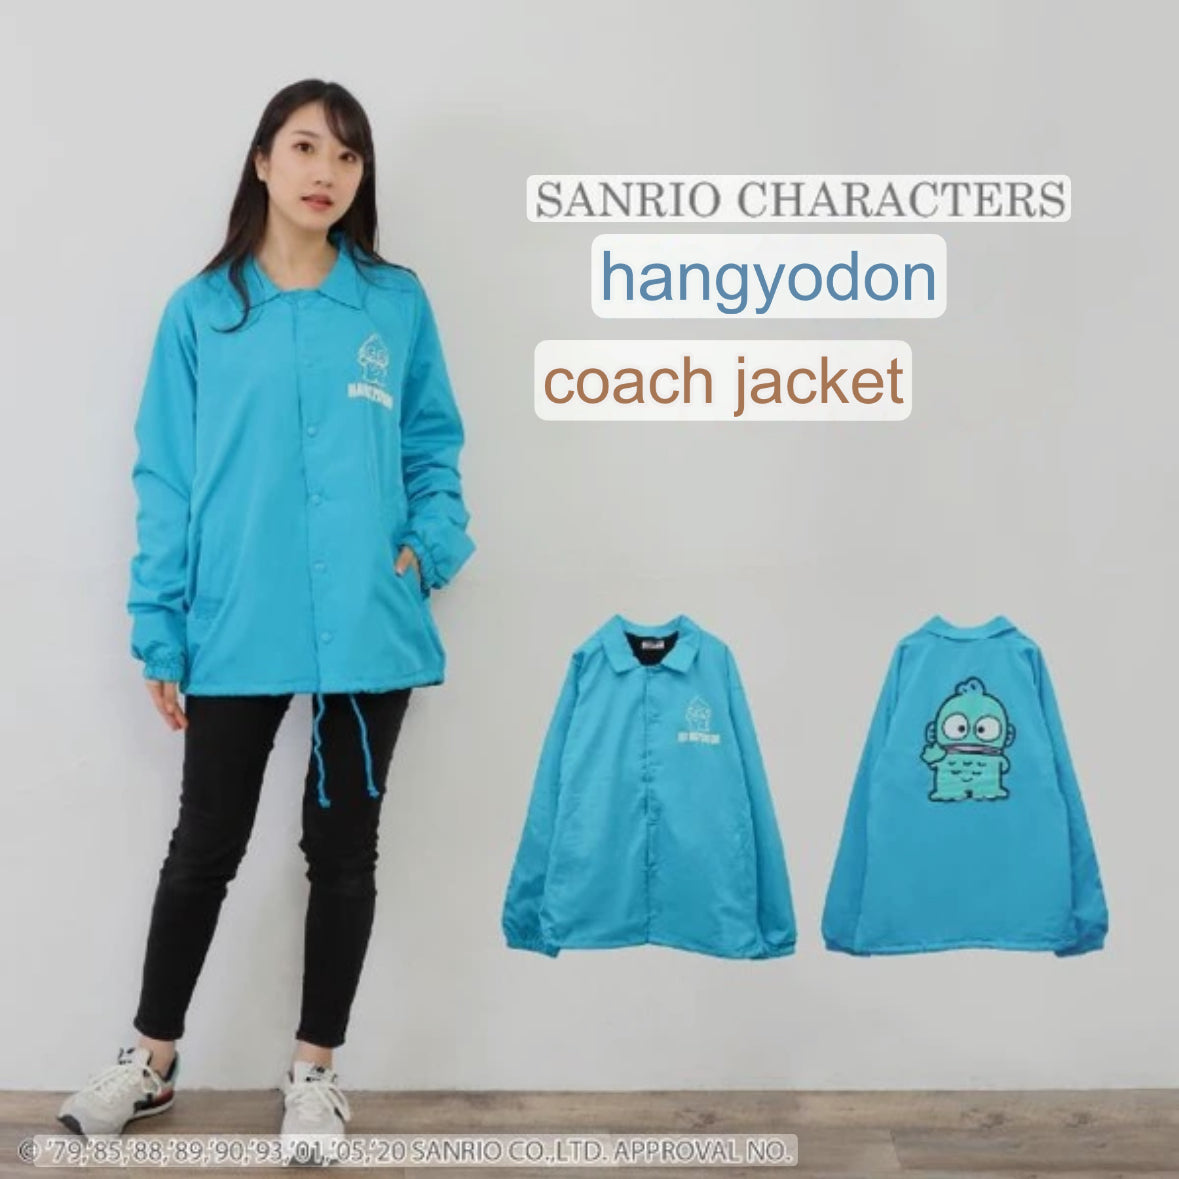 Hangyodon- Sanrio Characters Coach Jacket Size L